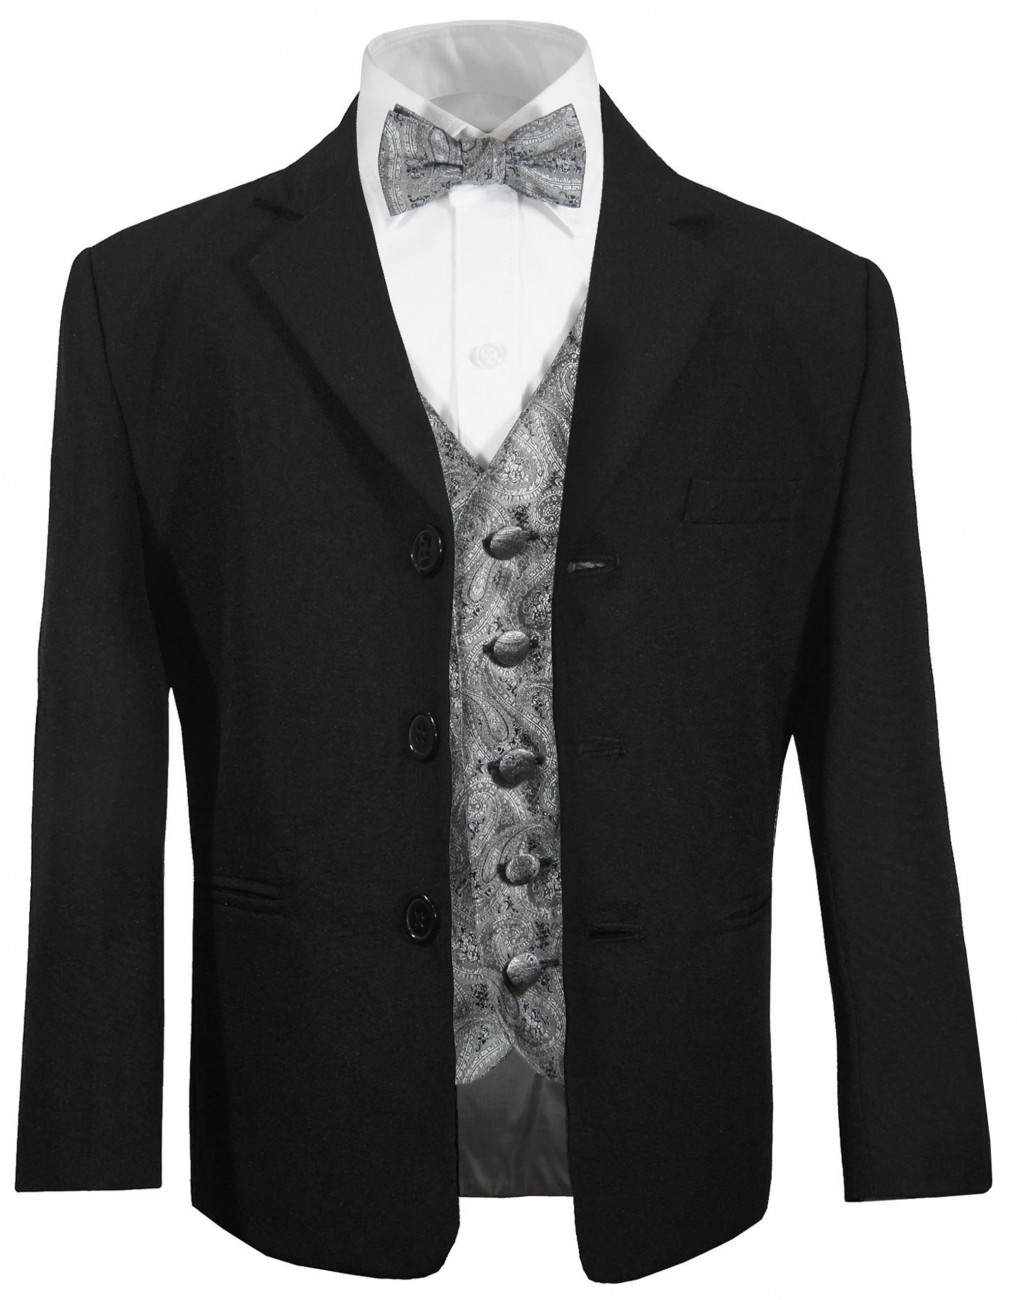 7pc Boy Formal Necktie Black White Suit Set Satin Bow Tie Vest Tuxedo Baby Sm-4T 